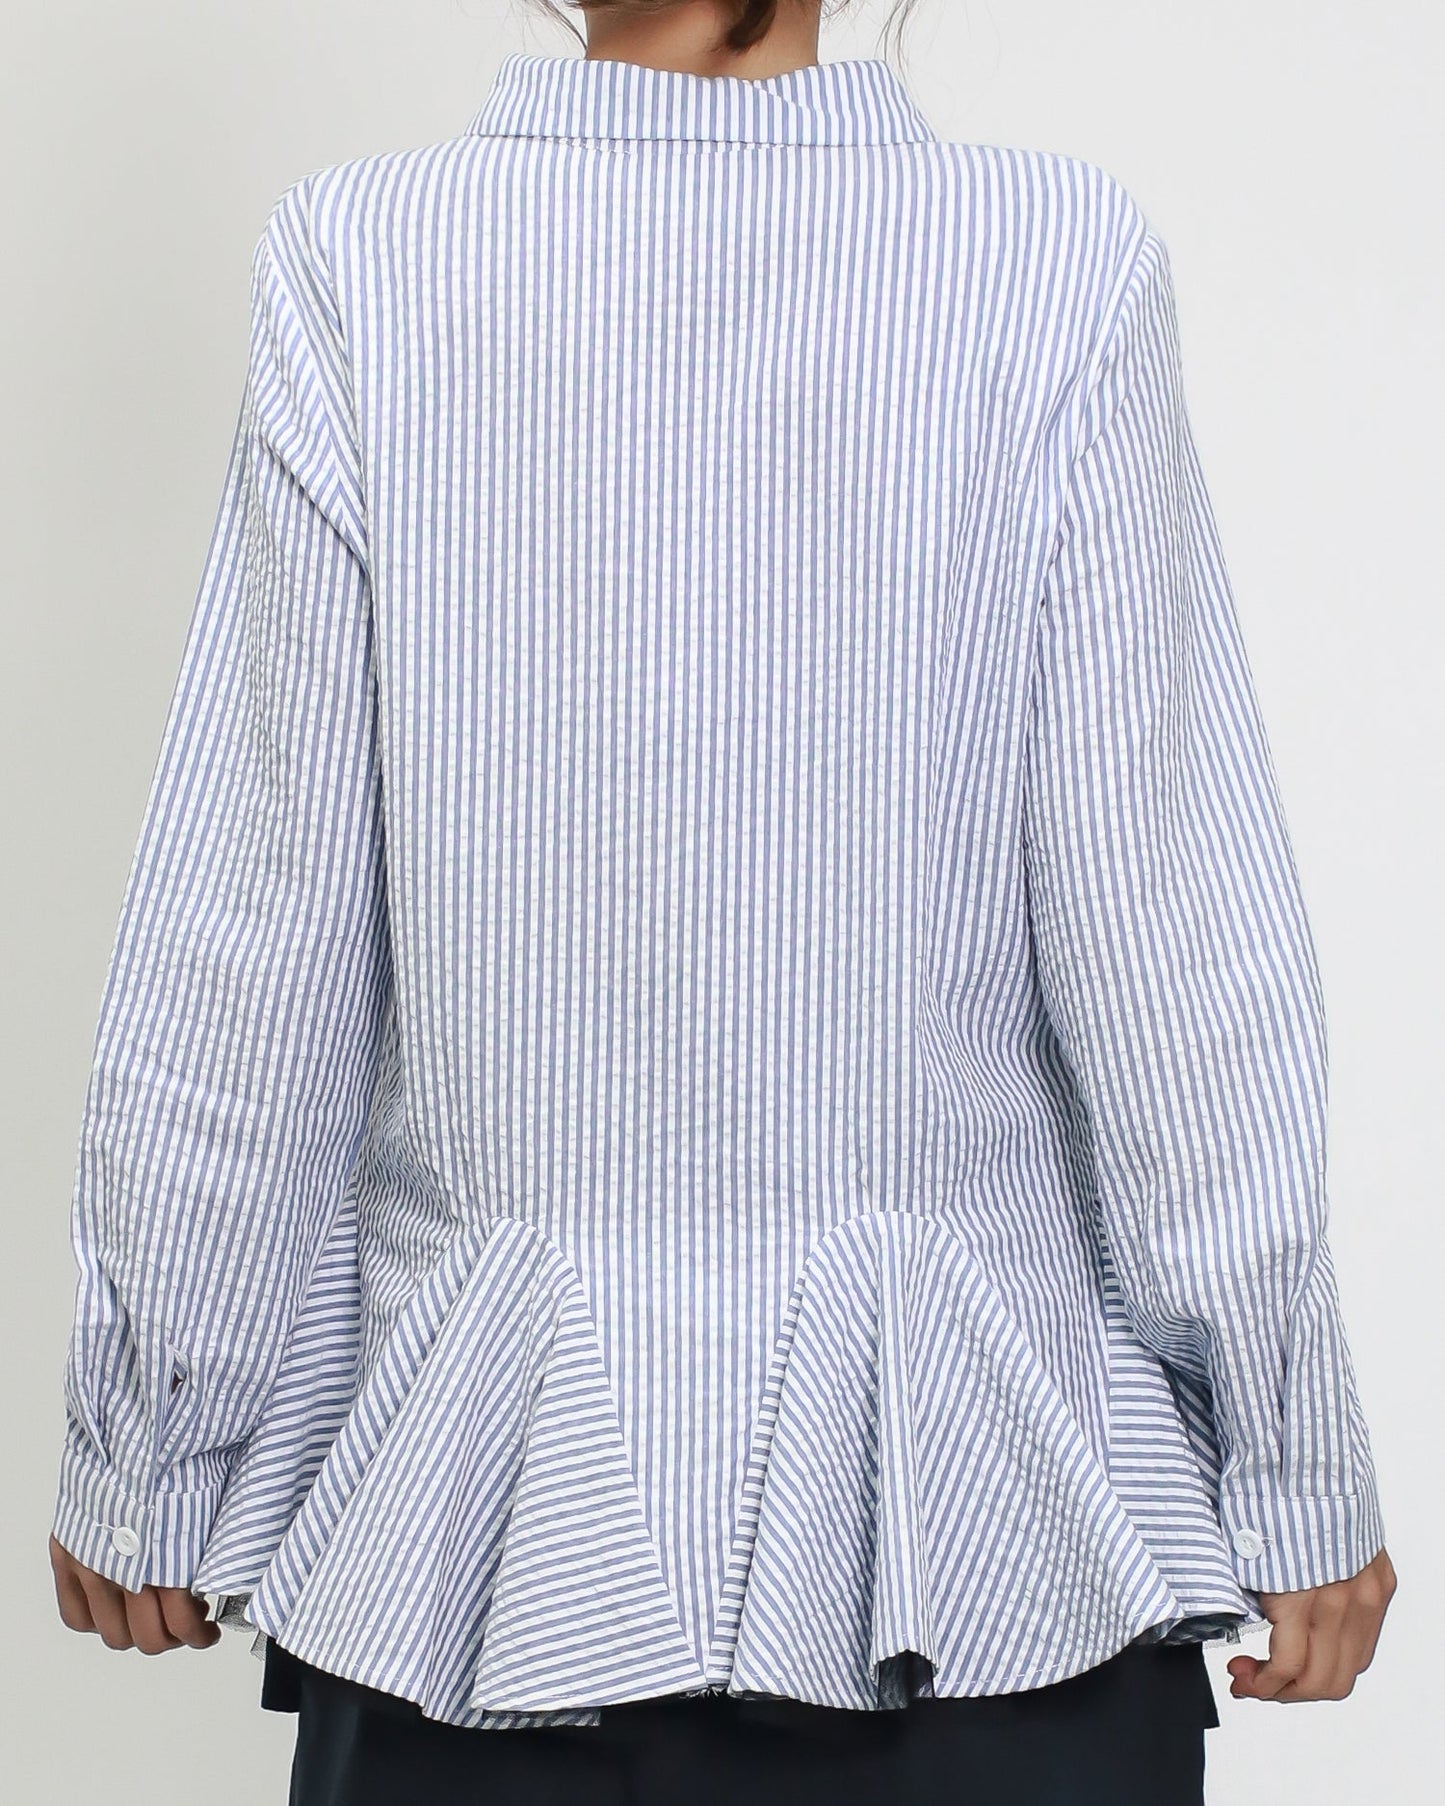 blue stripes texture shirt w/ black mesh layer ruffles hem *pre-order*